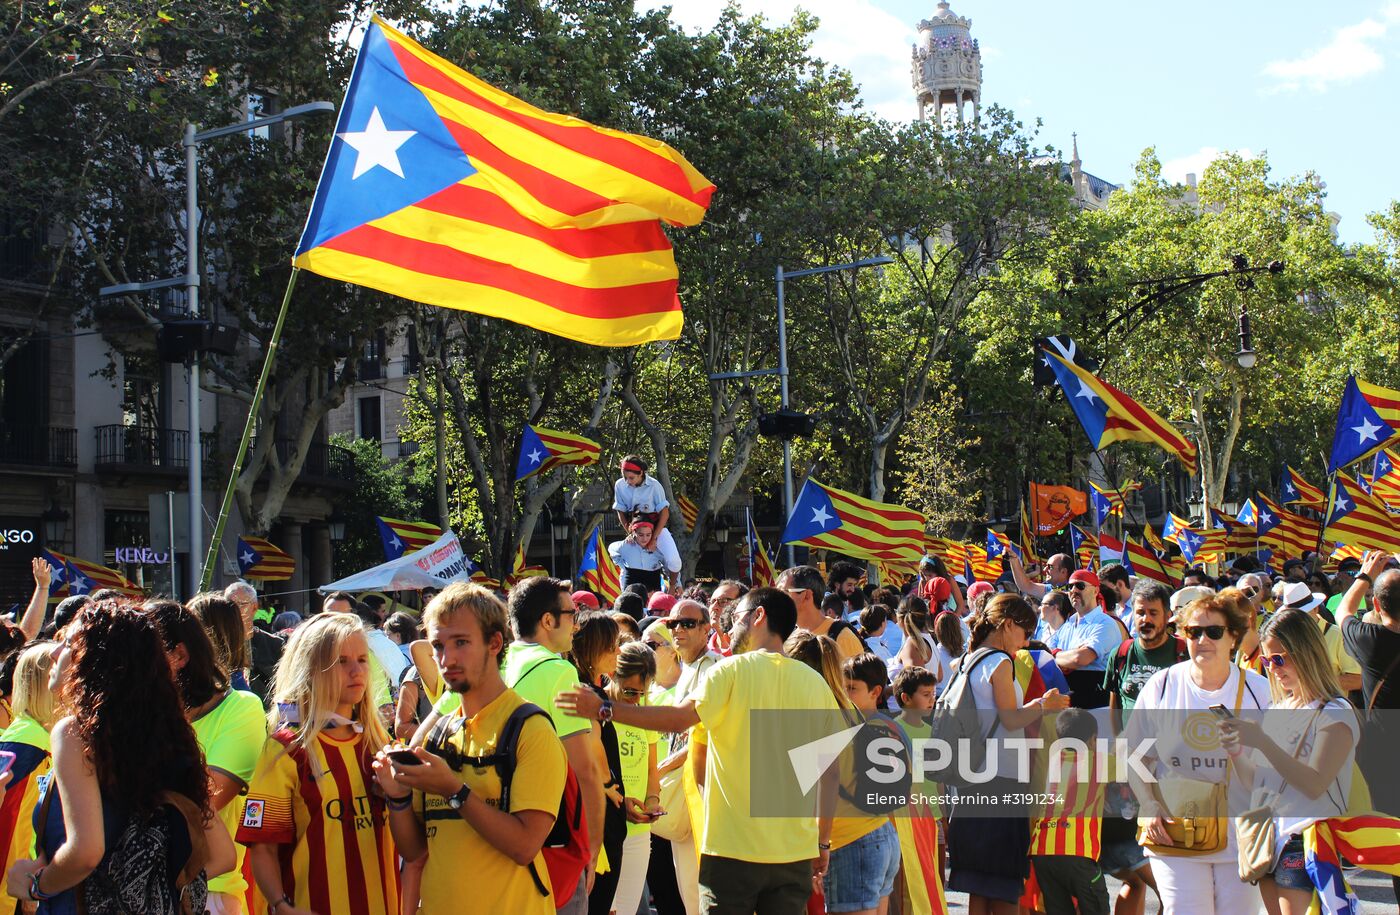 People of Barcelona support referendum